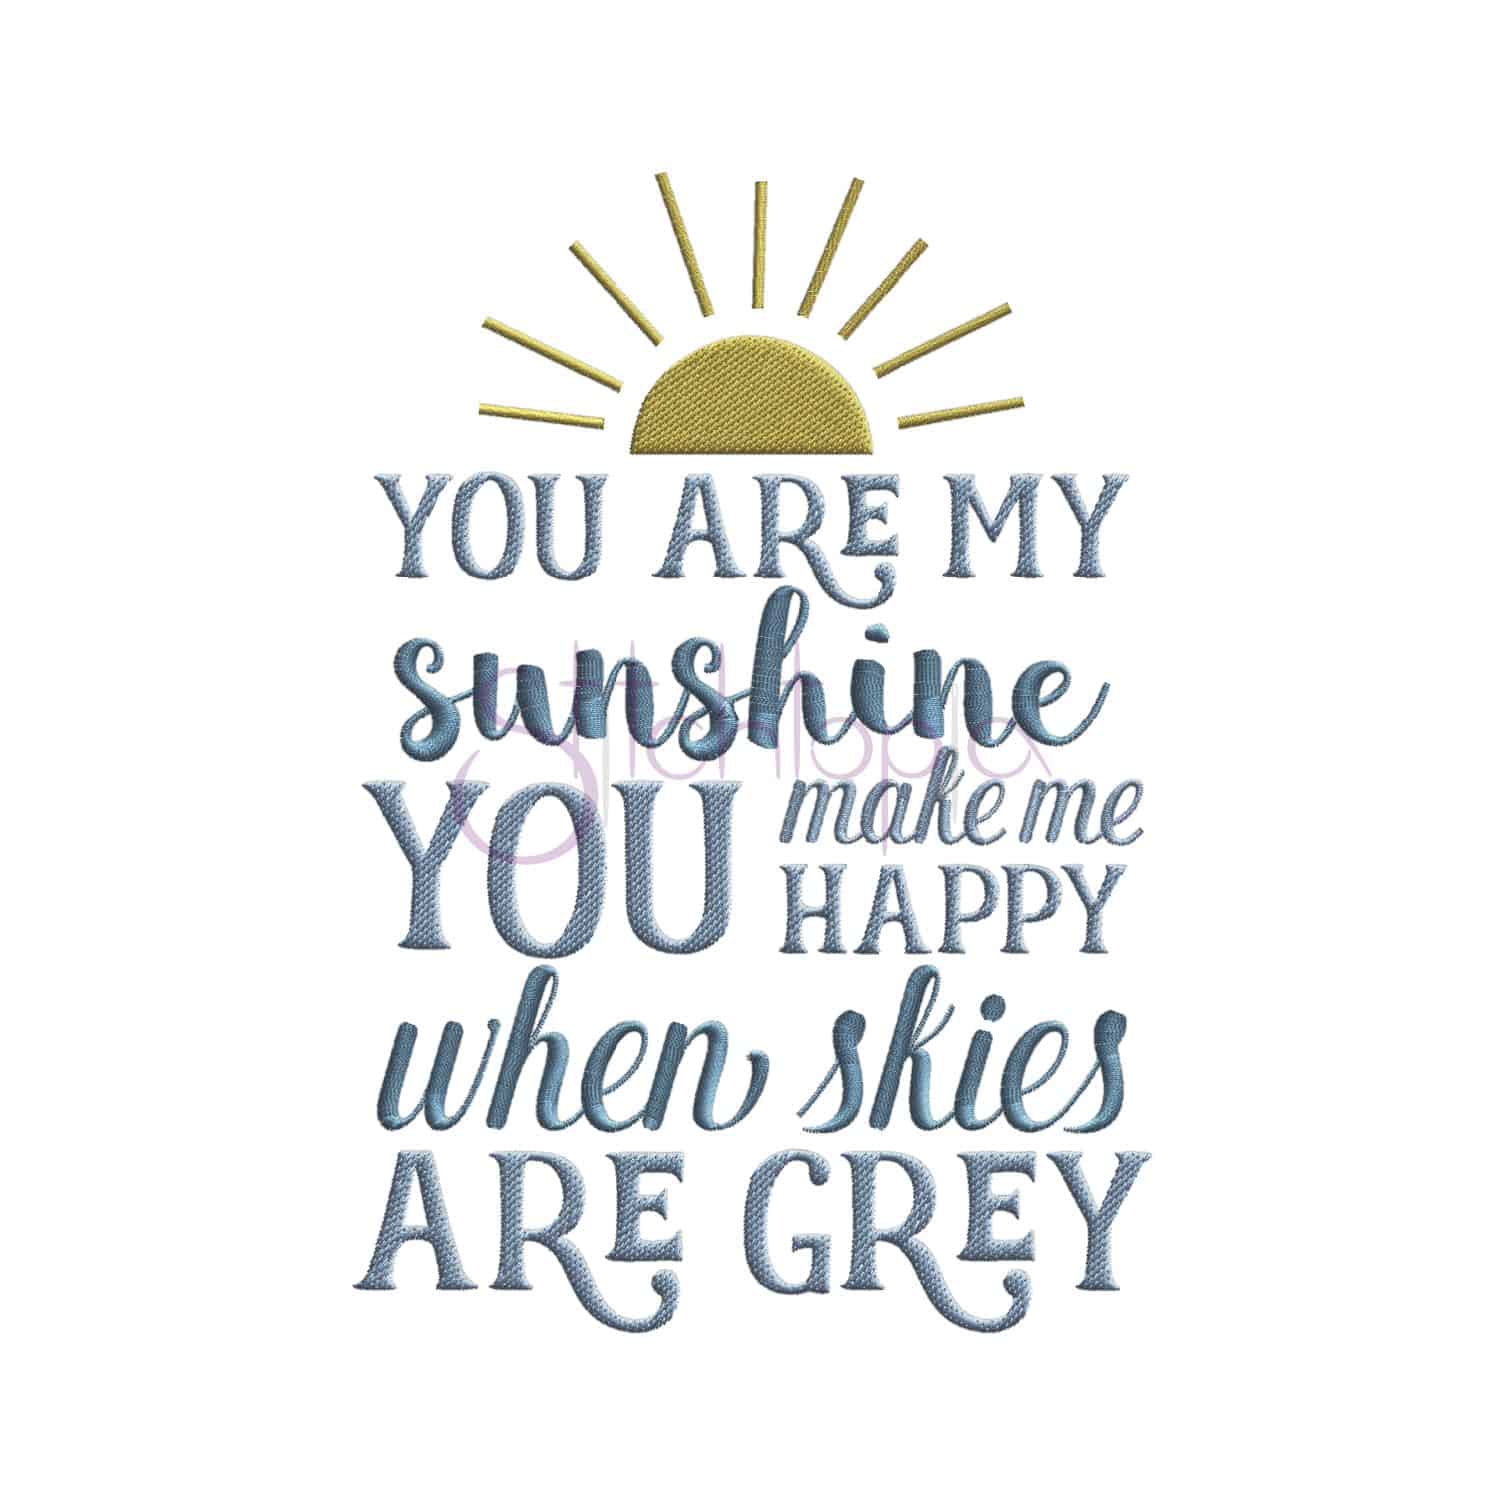 You Are My Sunshine Embroidery Design Stitchtopia